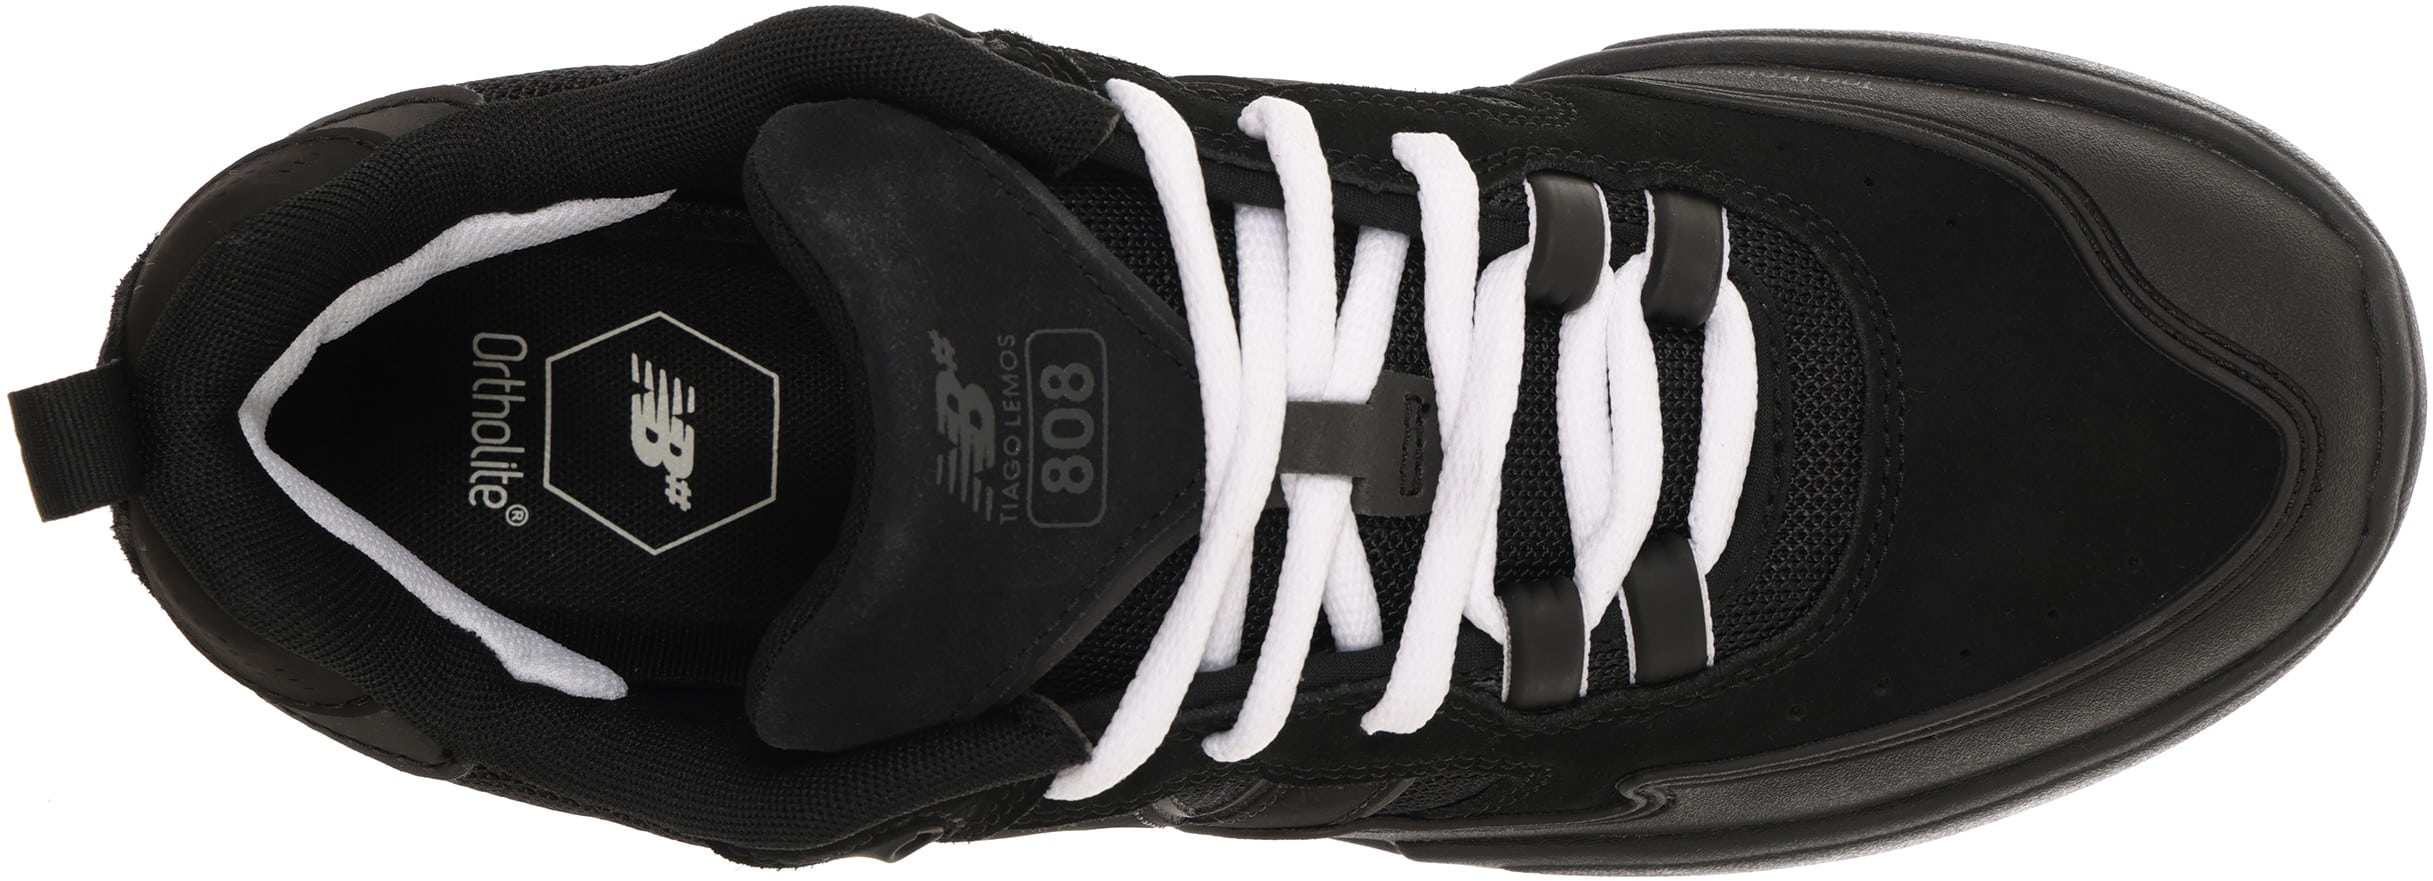 New Balance Numeric 808 Tiago Lemos Skate Shoes - black/gum | Tactics